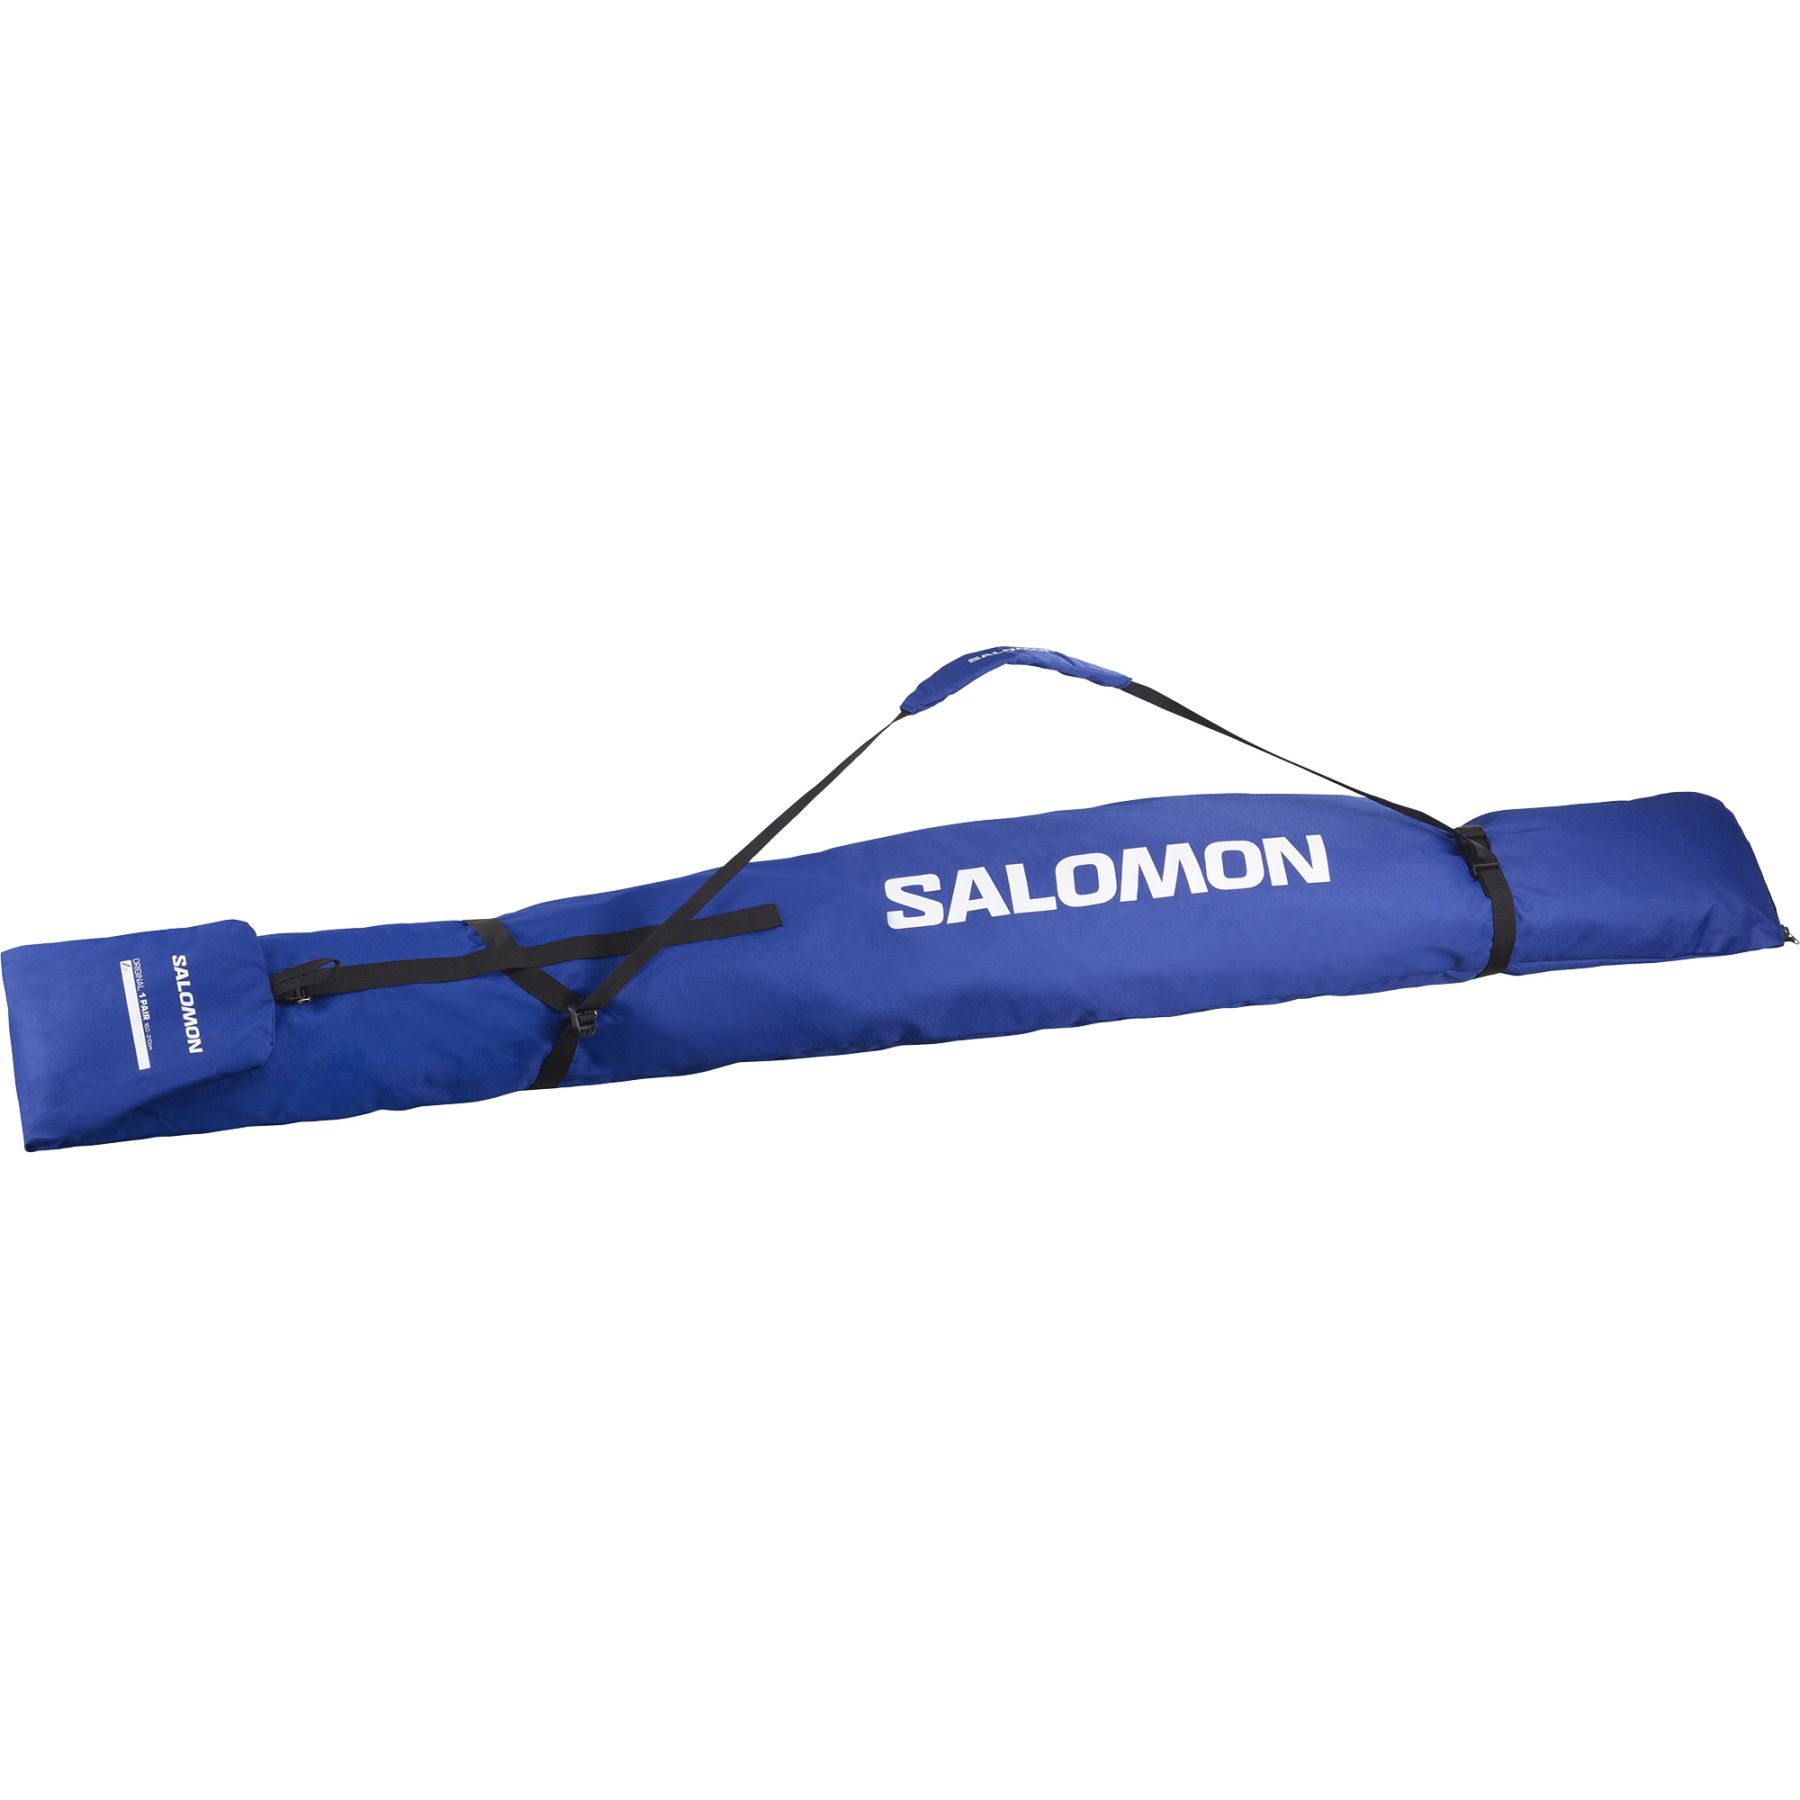 Salomon Original 1P 160-210, skitaske, blå thumbnail